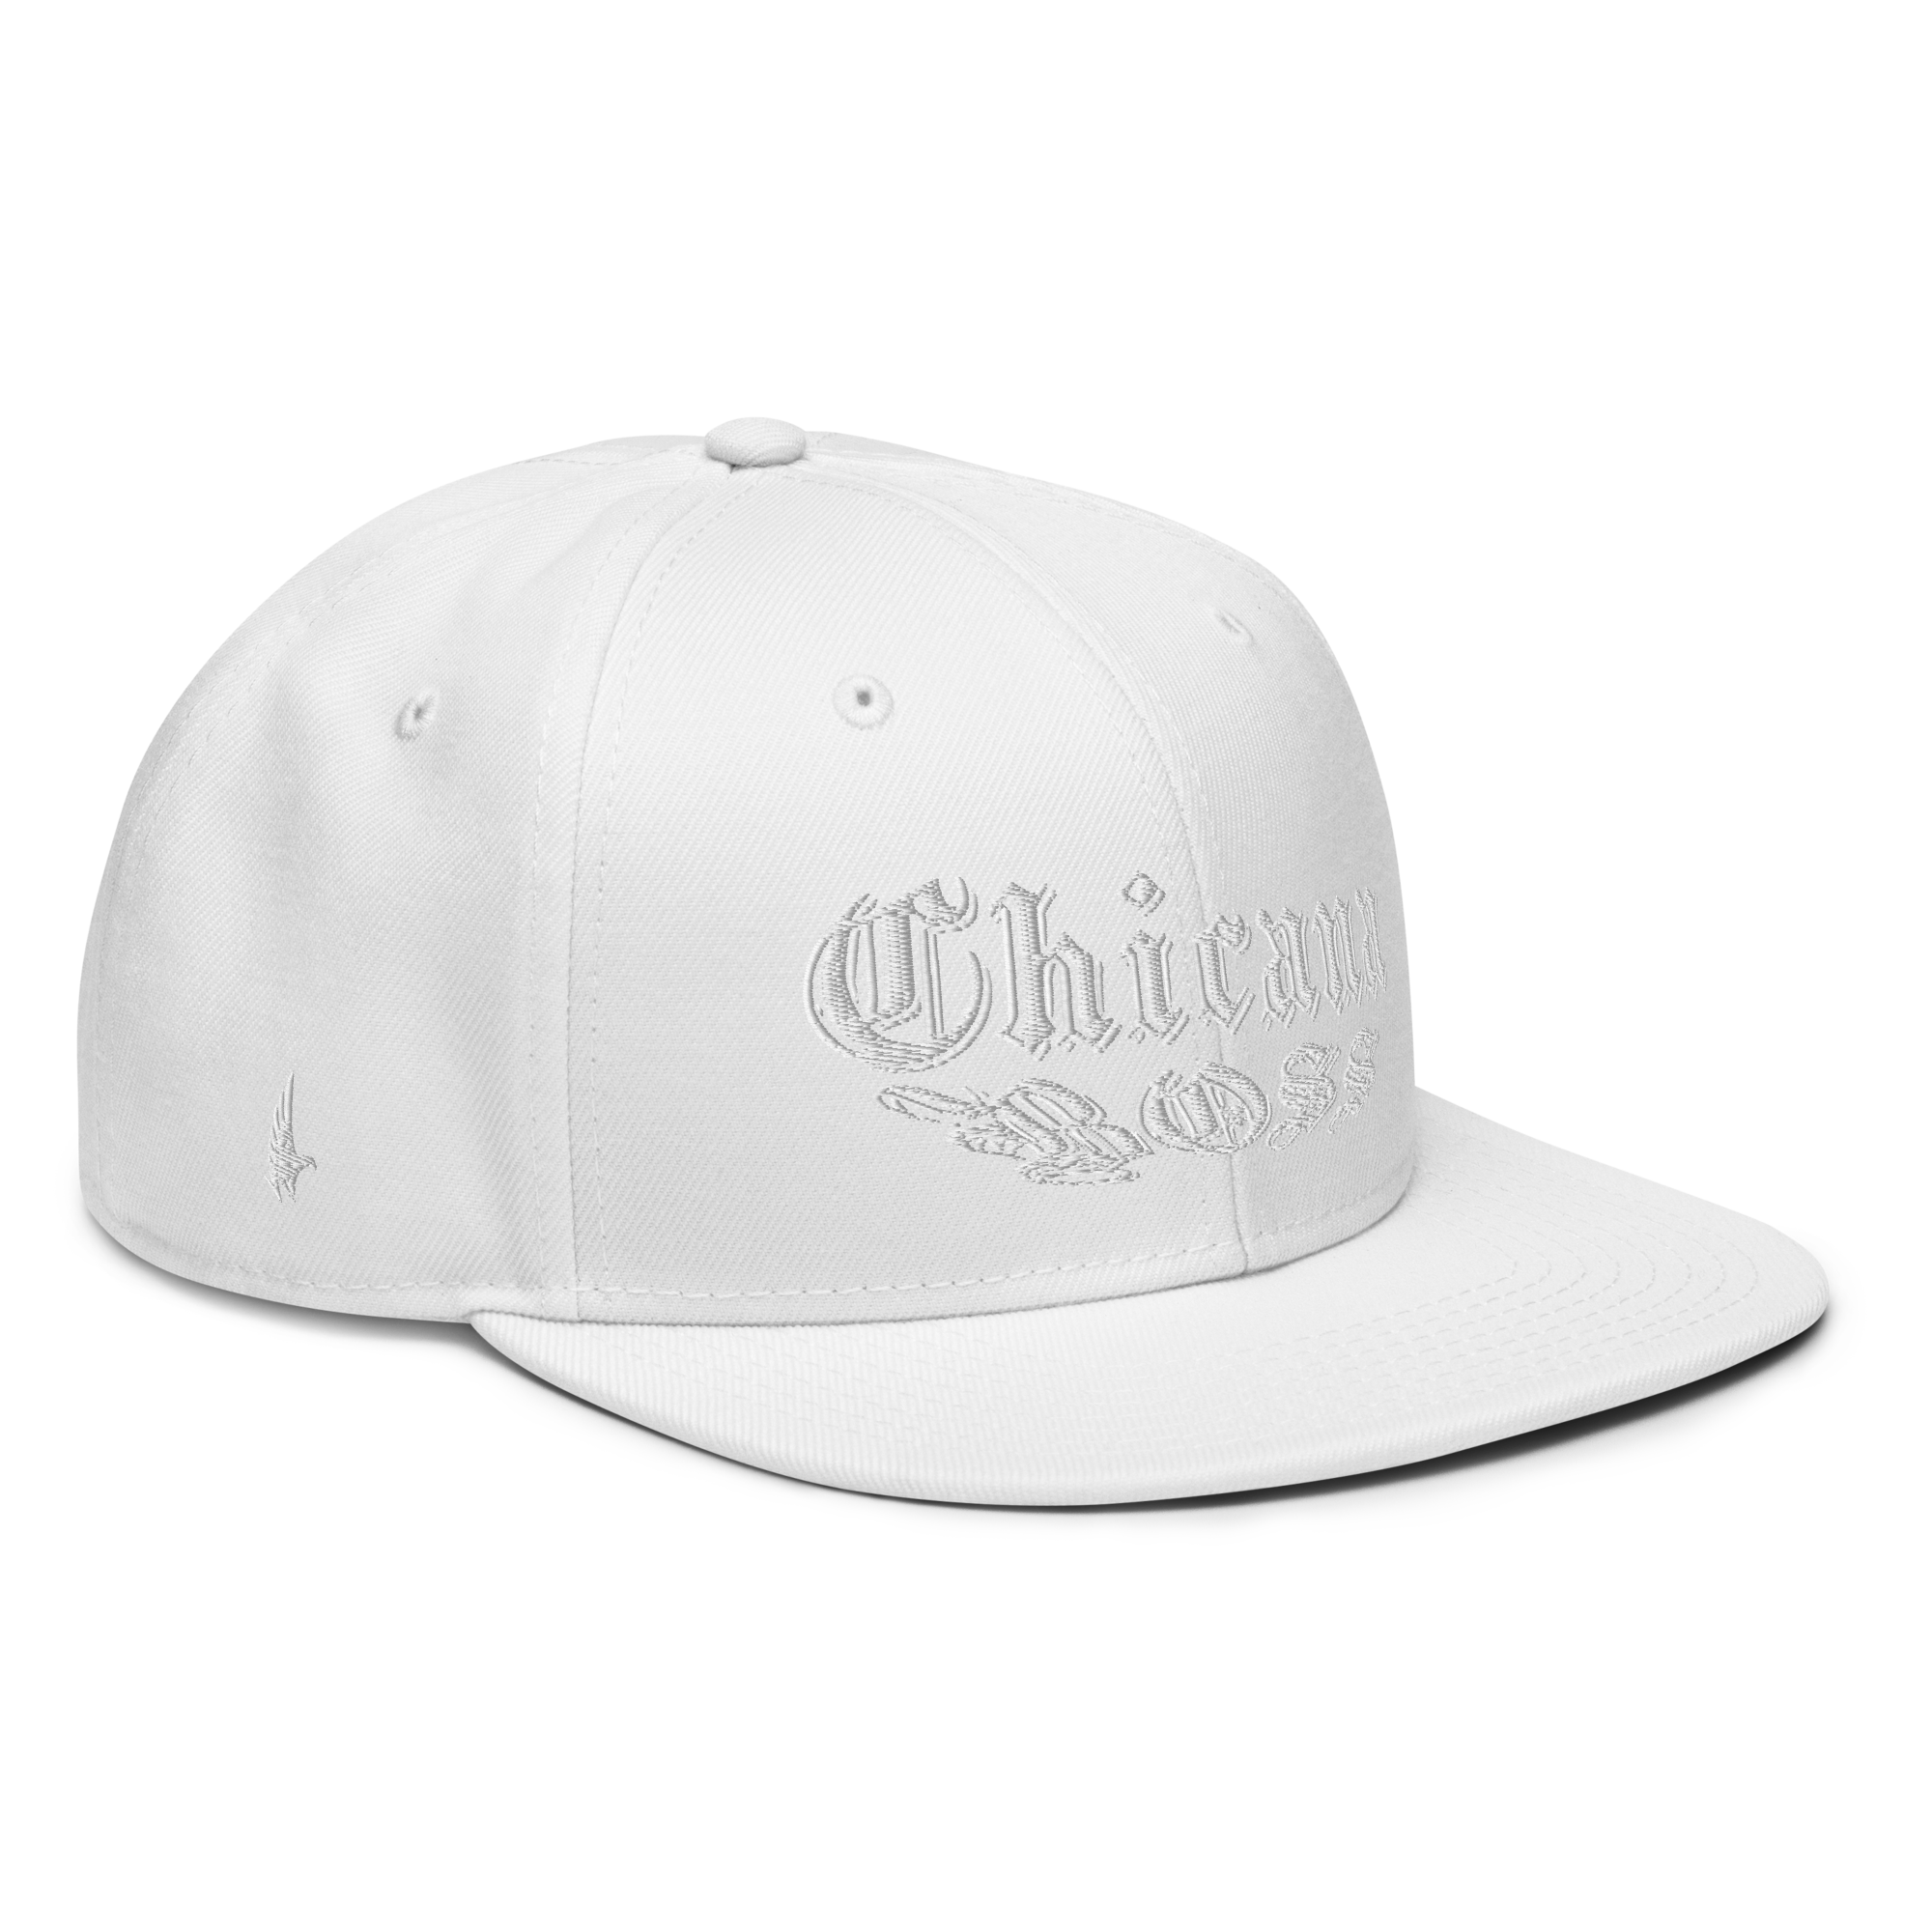 Chicana Boss Snapback Hat - White/White - Loyalty Vibes